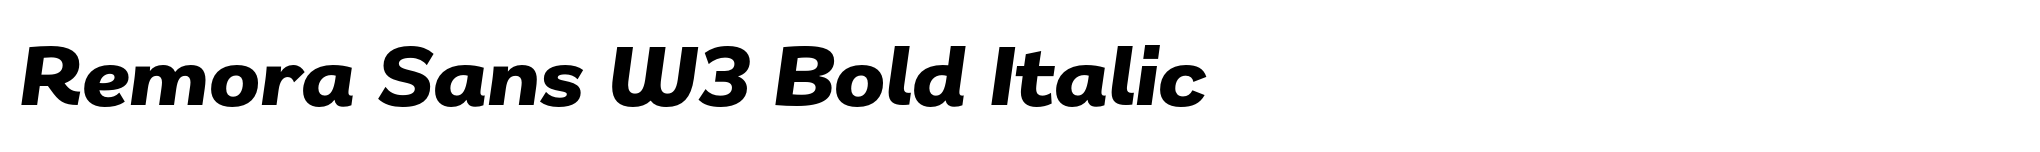 Remora Sans W3 Bold Italic image